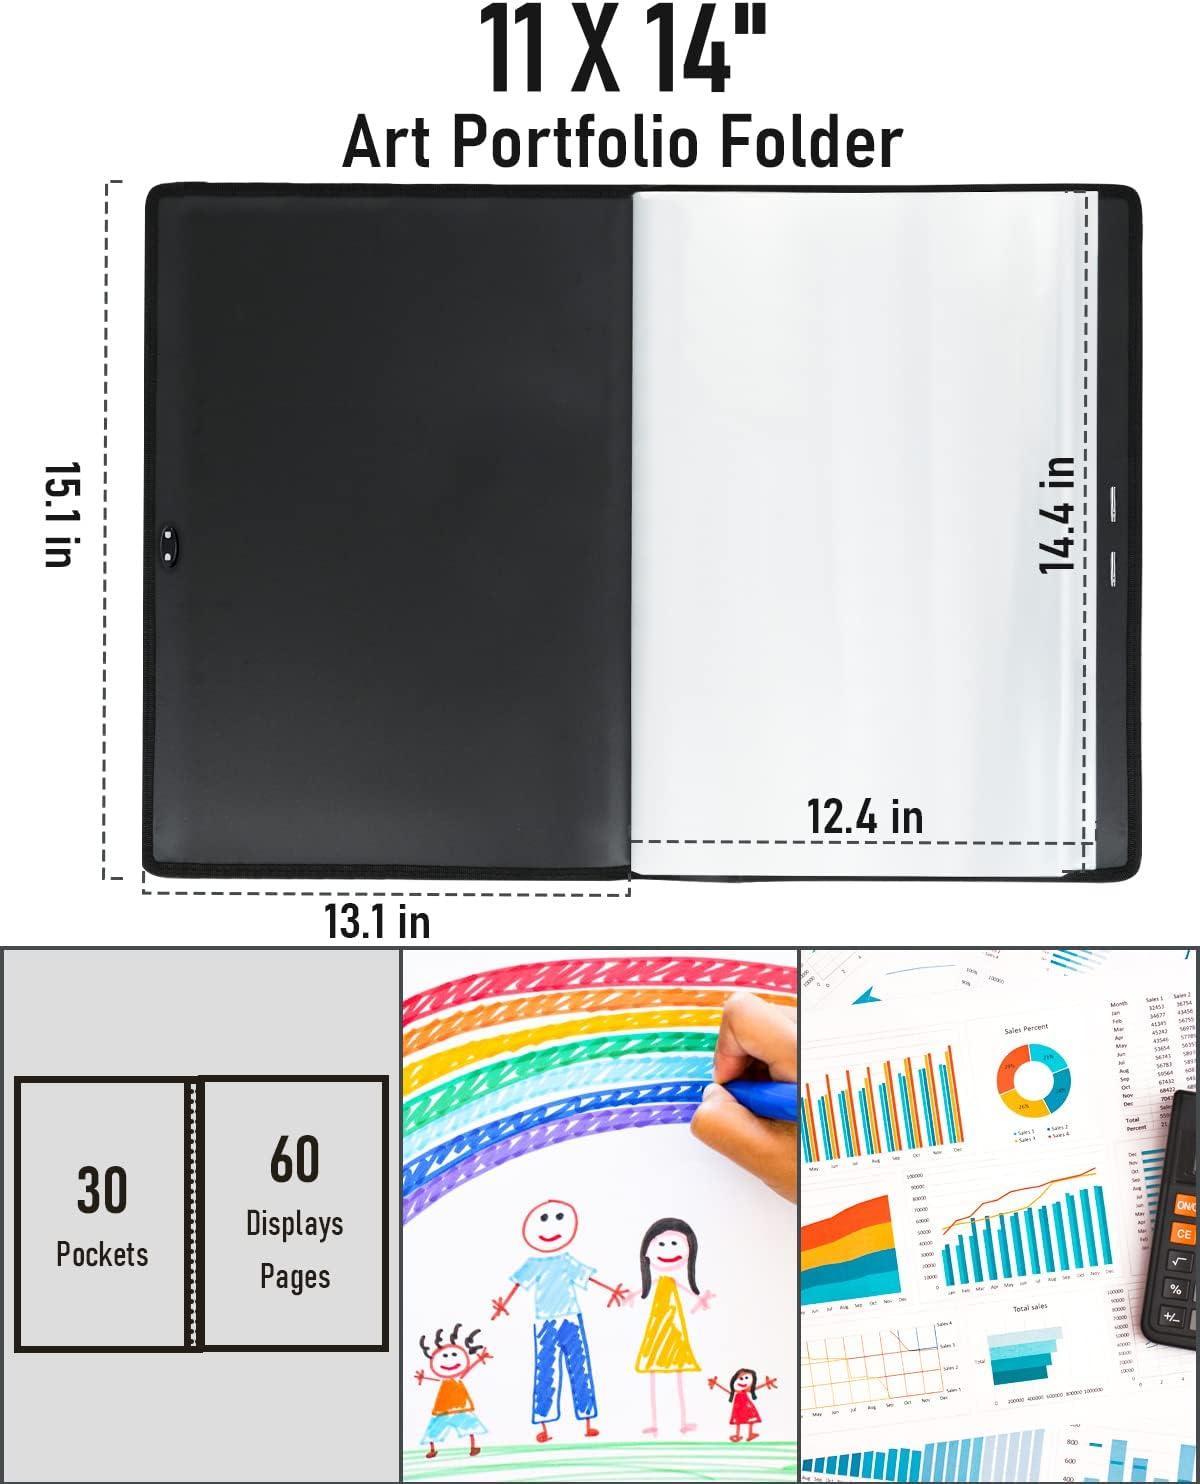 Nicpro 11x14 Art Portfolio Folder, 30 Pockets Display 60 Pages Art  Painting Portfolio Binder with Clear Plastic Sleeves, Presentation Storage  Book for Kids & Artists Artwork Drawing - (Black)